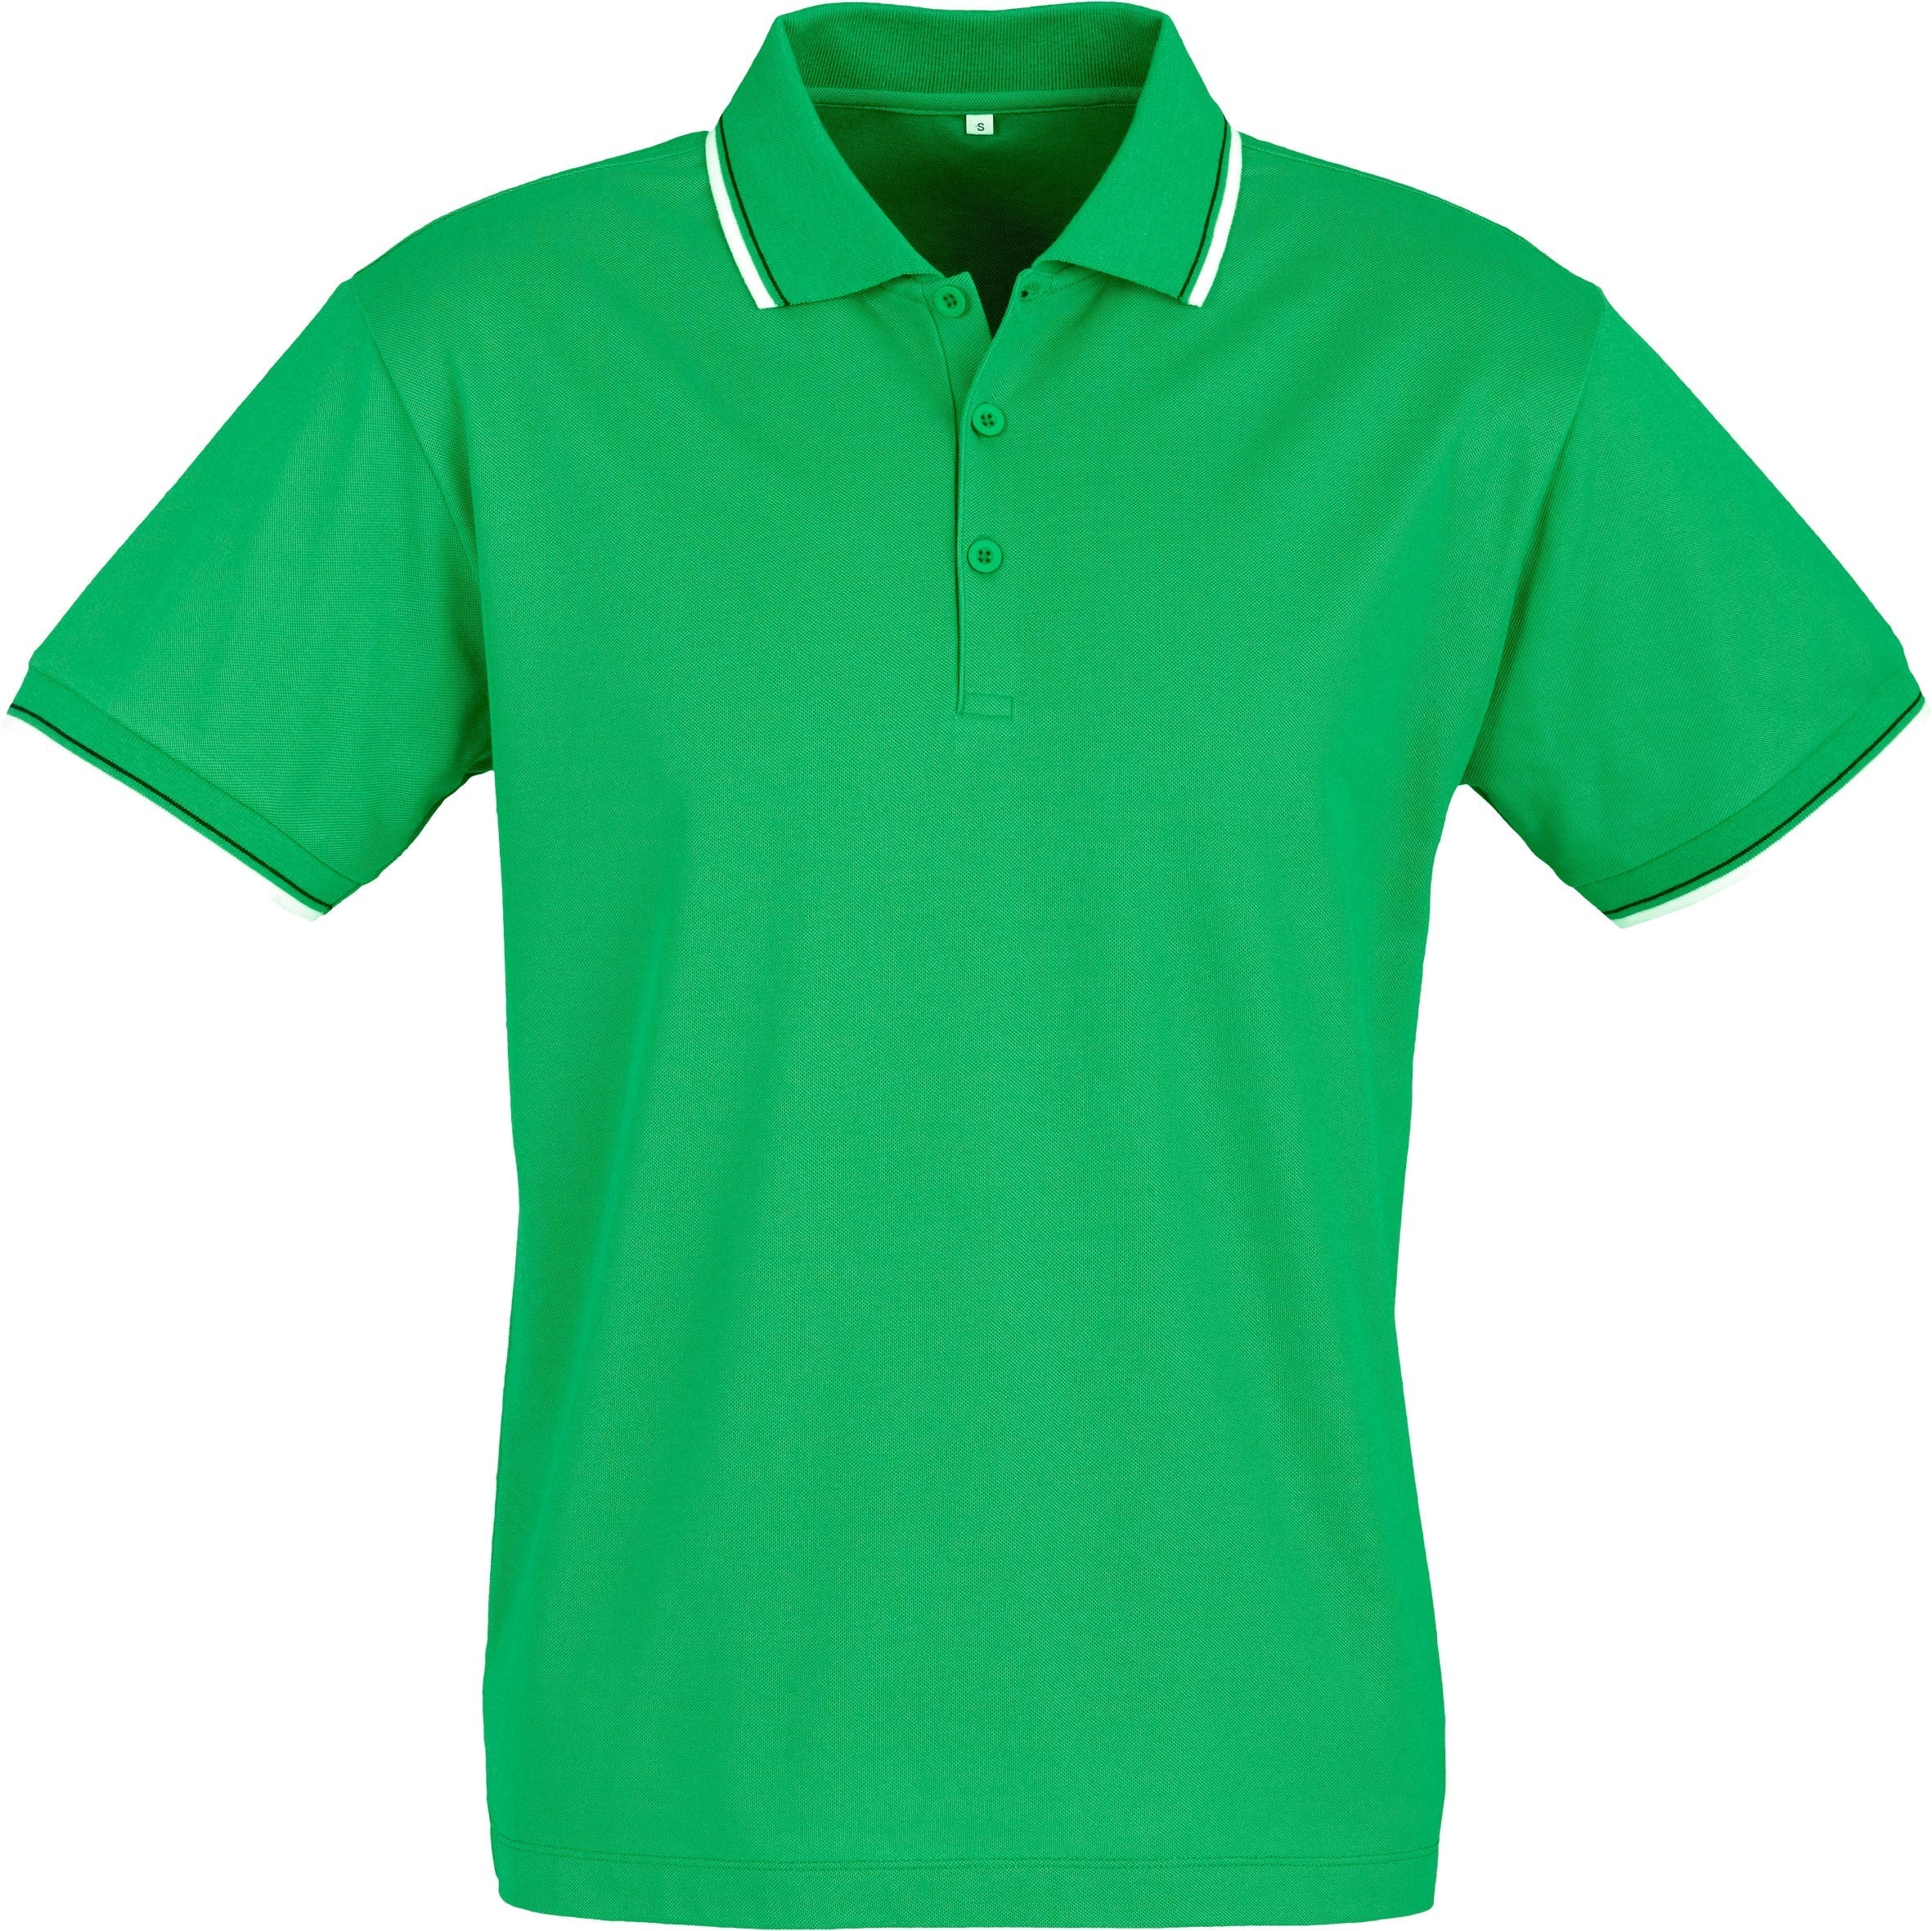 Mens Cambridge Golf Shirt - Black Red Only-L-Green-G